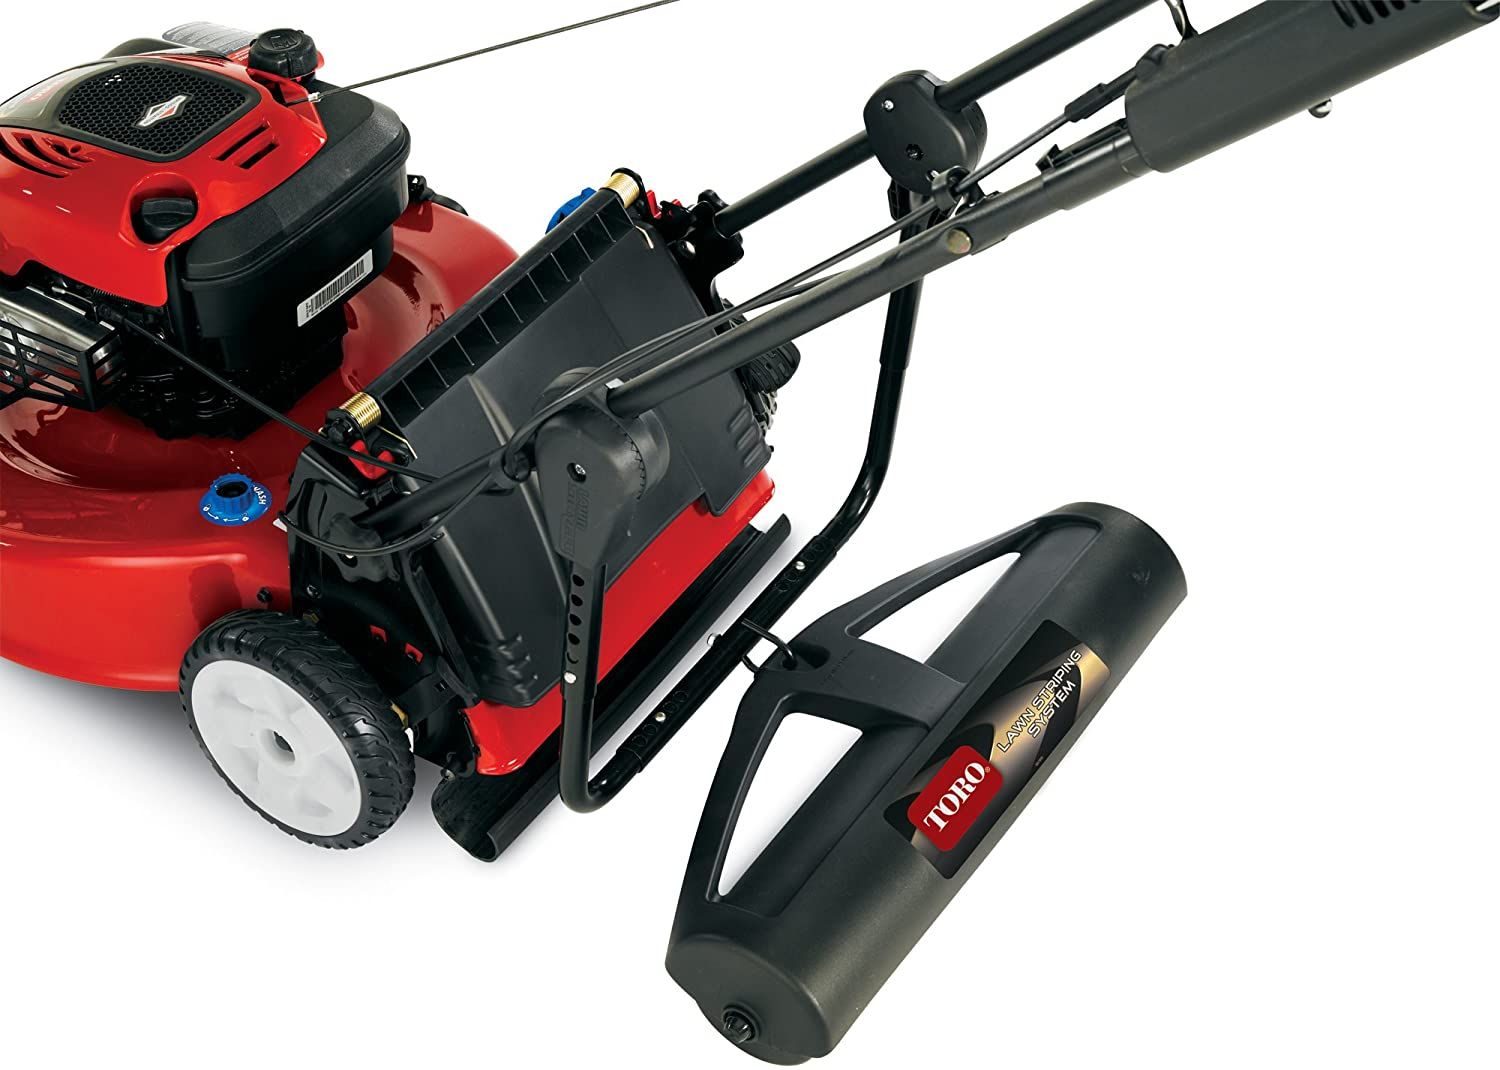 Toro 20601 Lawn Striping Kit 22, Lawn Equipment, Snow Removal Equipment, Construction Equipment, Toronto Ontario